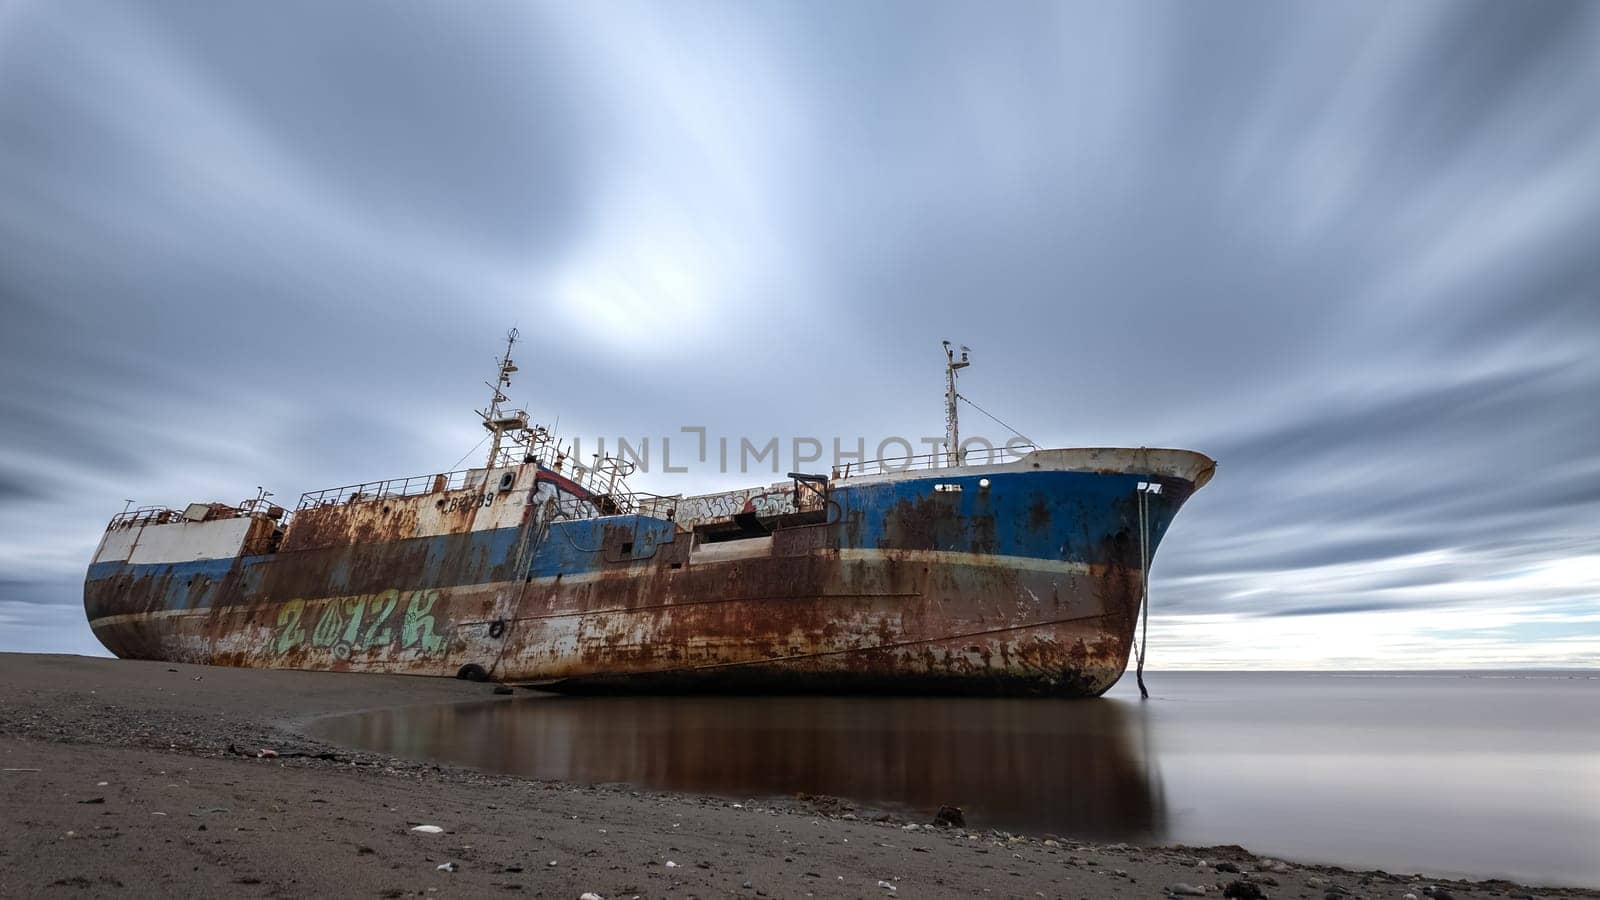 Abandoned Shipwreck on a Deserted Shoreline at Dusk by FerradalFCG